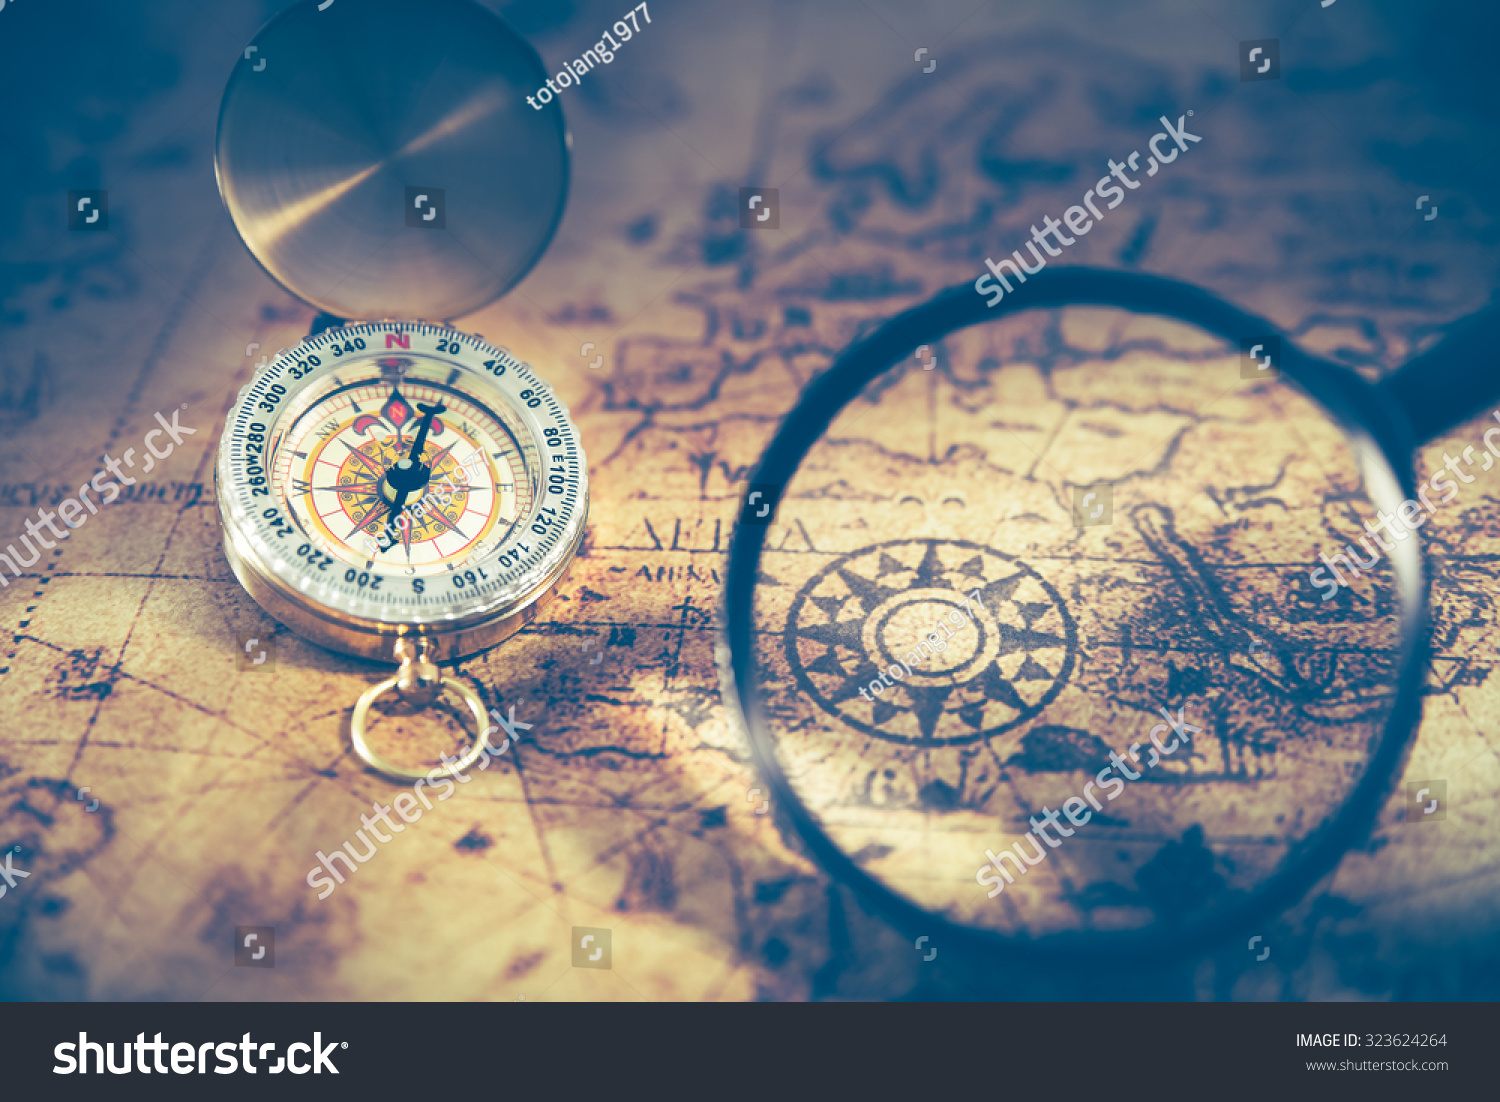 Retro compass on ancient world map, dark vintage style #323624264